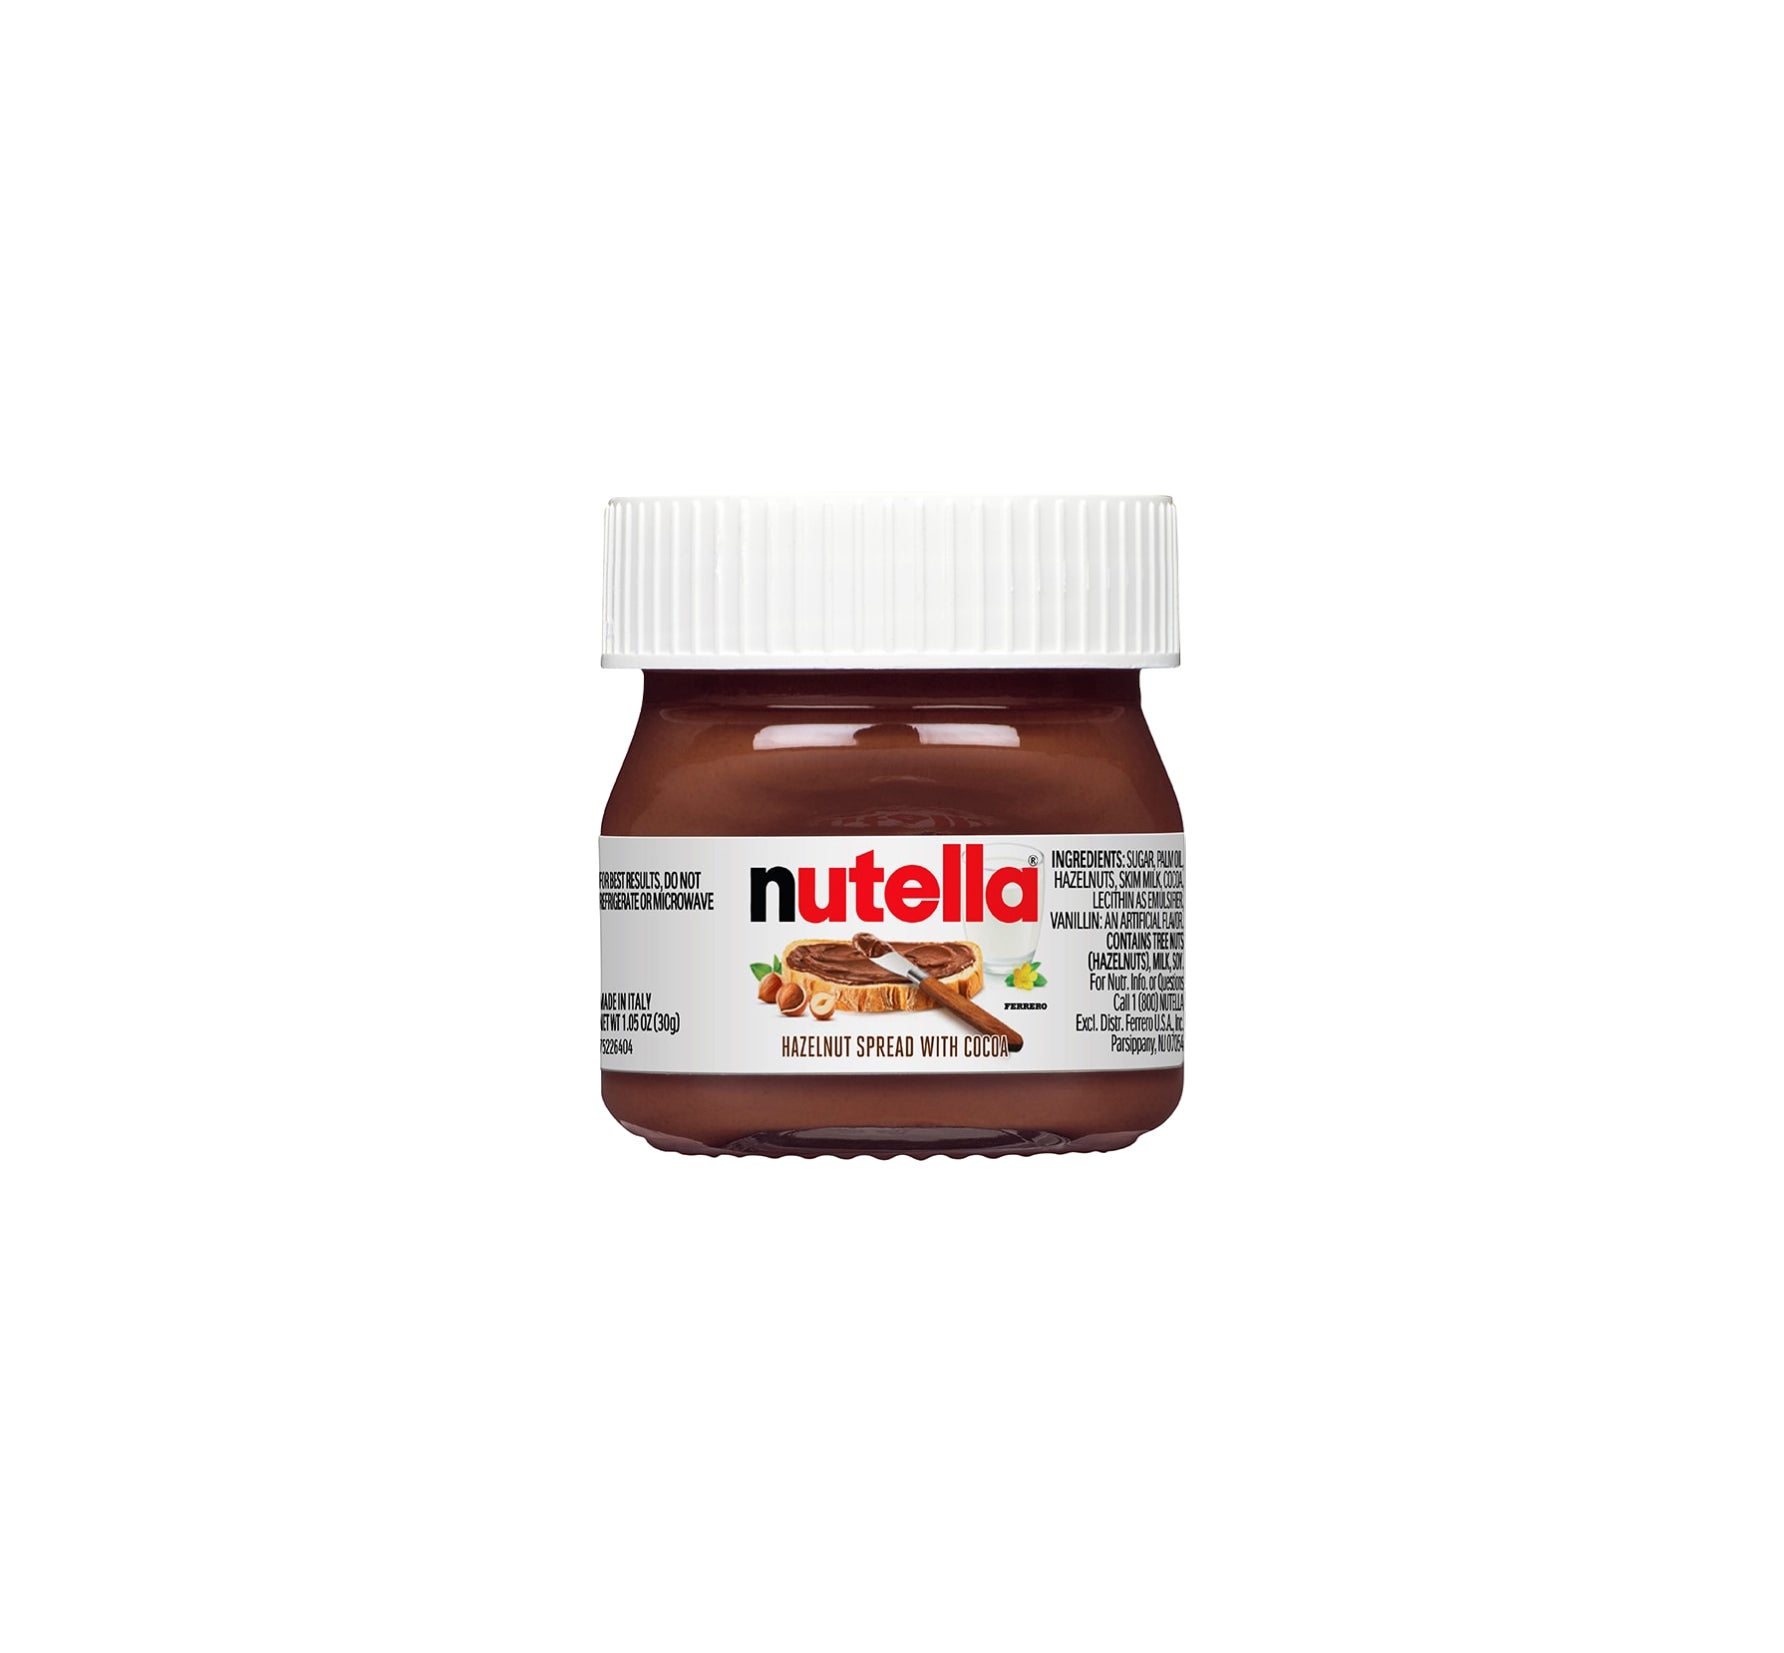 Nutella Mini 25g, comprar online